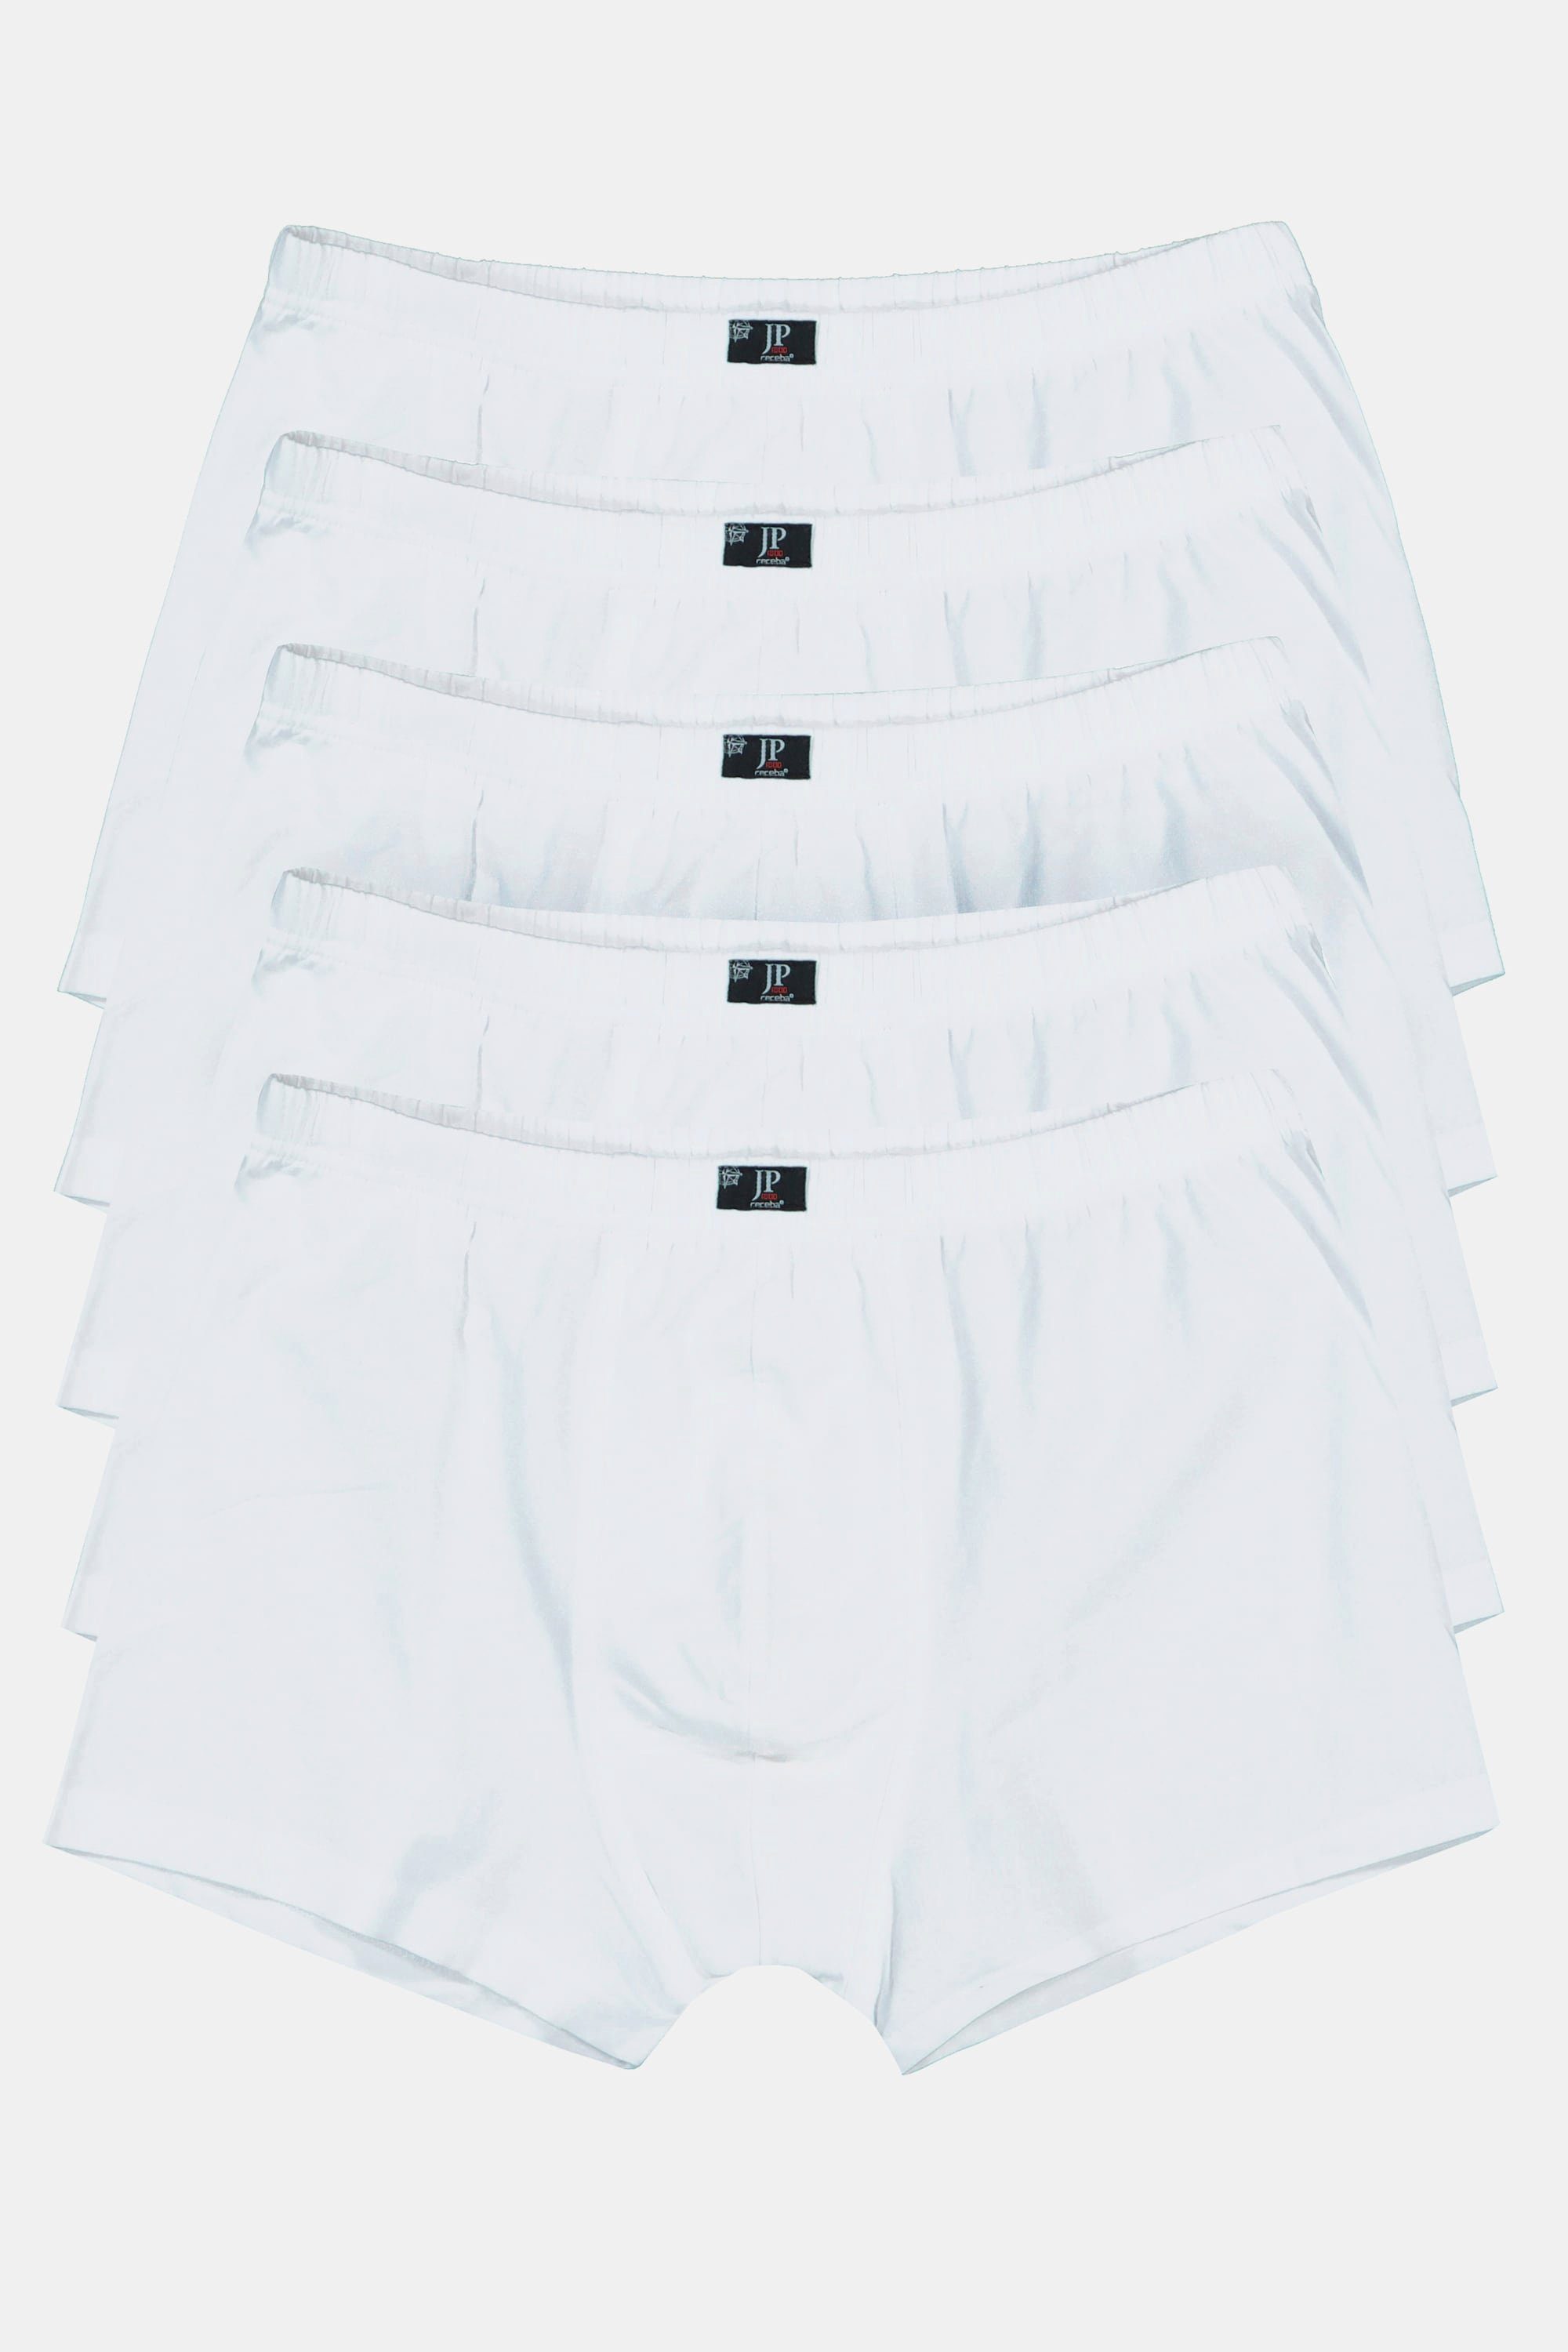 7XL 1 Slip schneeweiß Pants bis JP1880 Farbe 5er-Pack Unterhose (5-St) Gr.